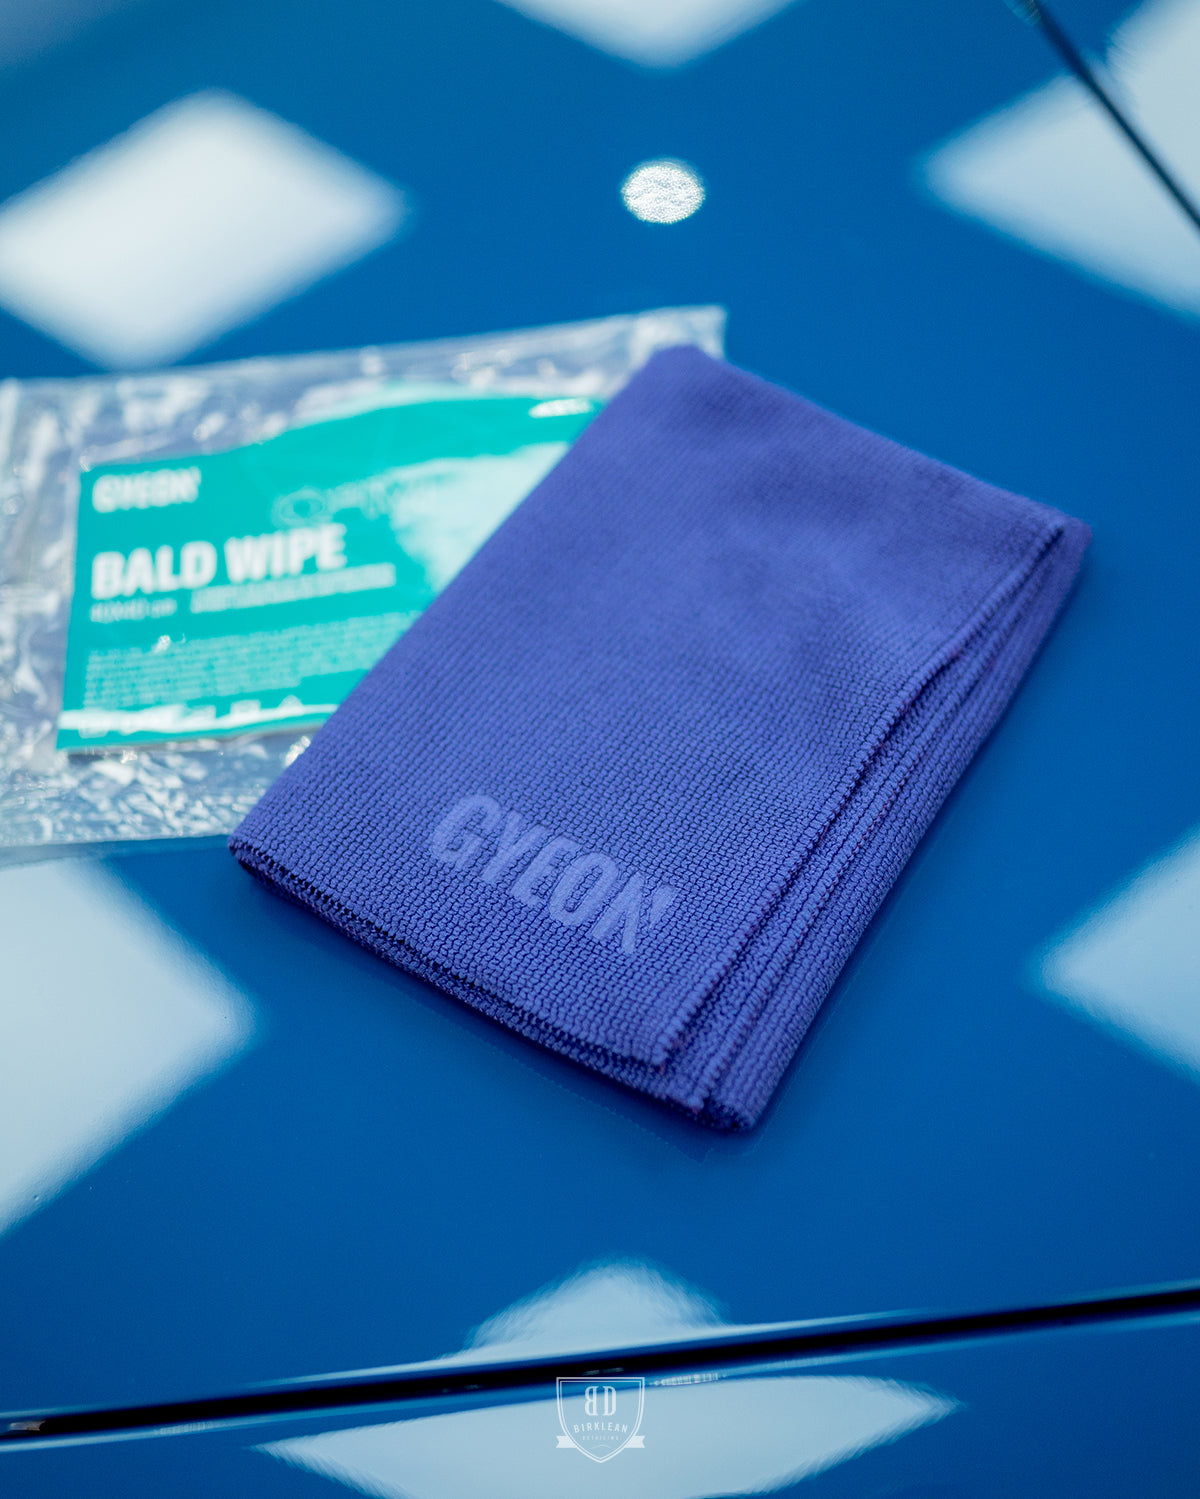 GYEON Q2M Bald Wipe EVO - Microfibre Towel